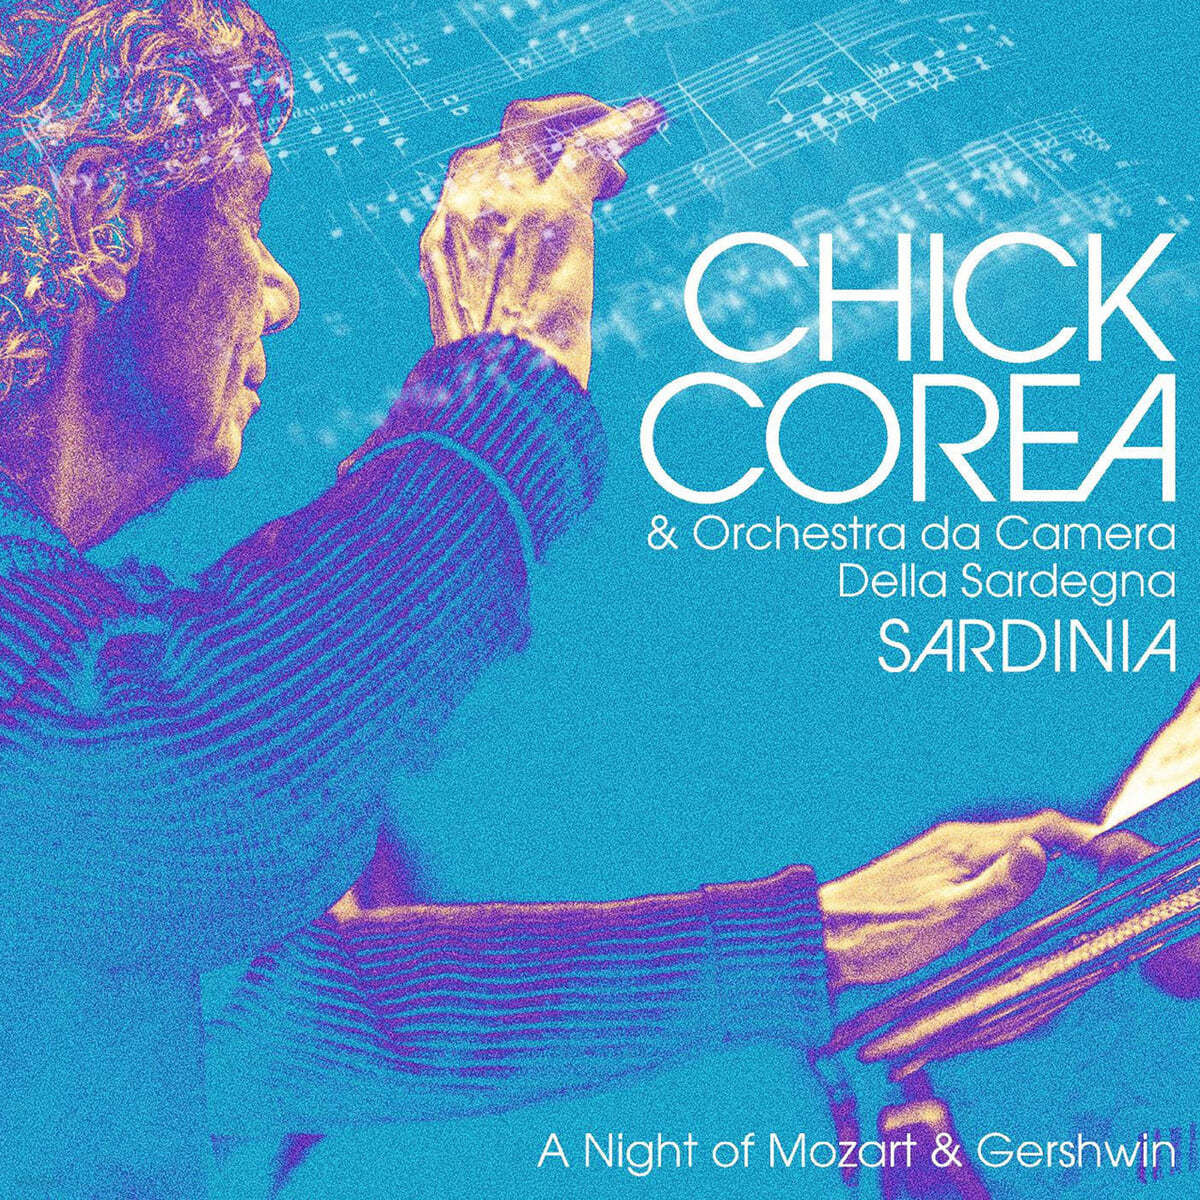 Chick Corea (칙 코리아) - 모차르트: 피아노 협주곡 24번 / 거슈윈: 랩소디 인 블루 Sardinia[2LP]